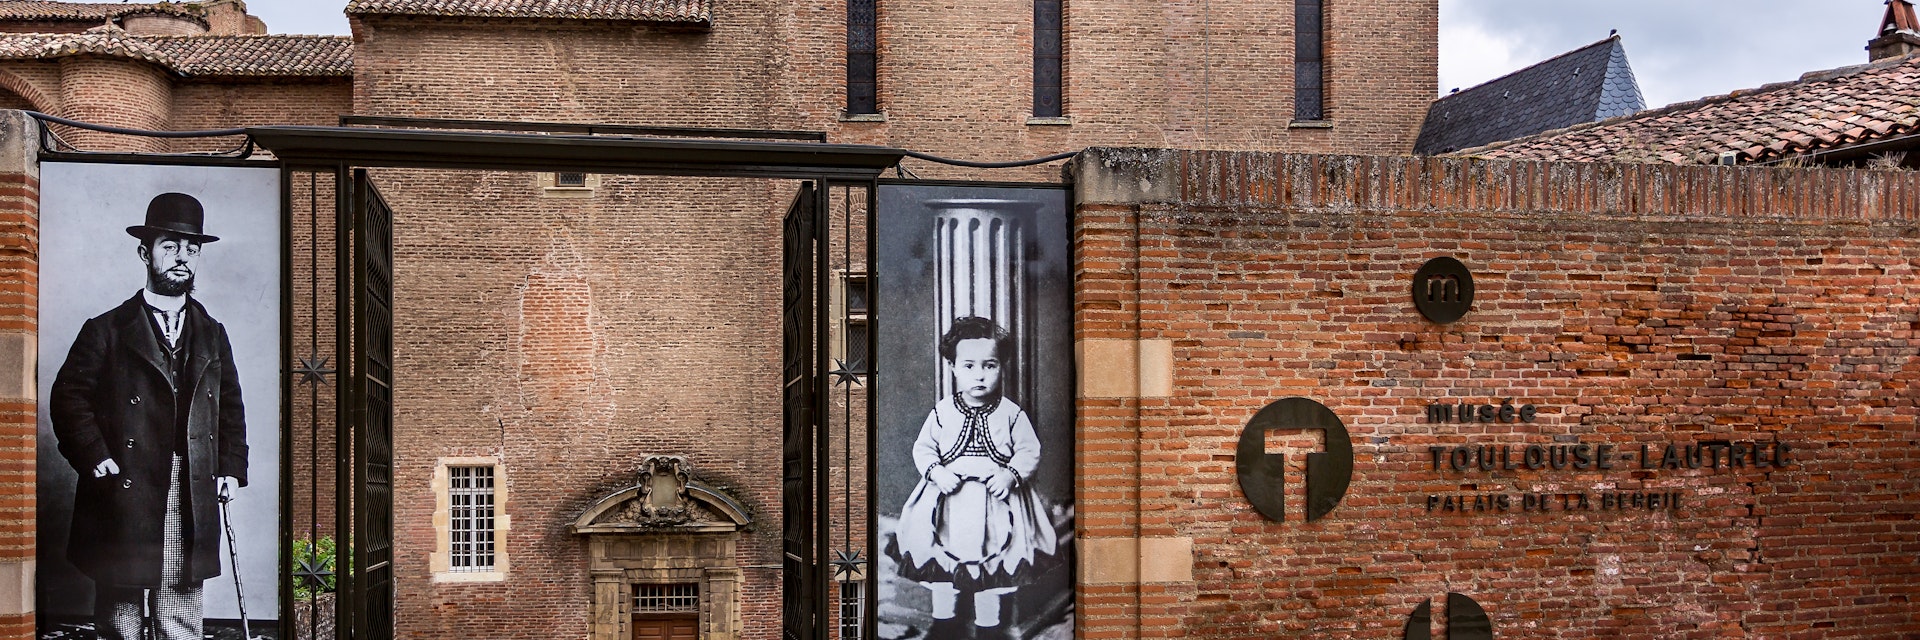 Toulouse Lautrec Museum exterior in Albi, France on 12 June 2015; Shutterstock ID 1319357564; your: Sloane Tucker; gl: 65050; netsuite: Online Editorial; full: POI
1319357564